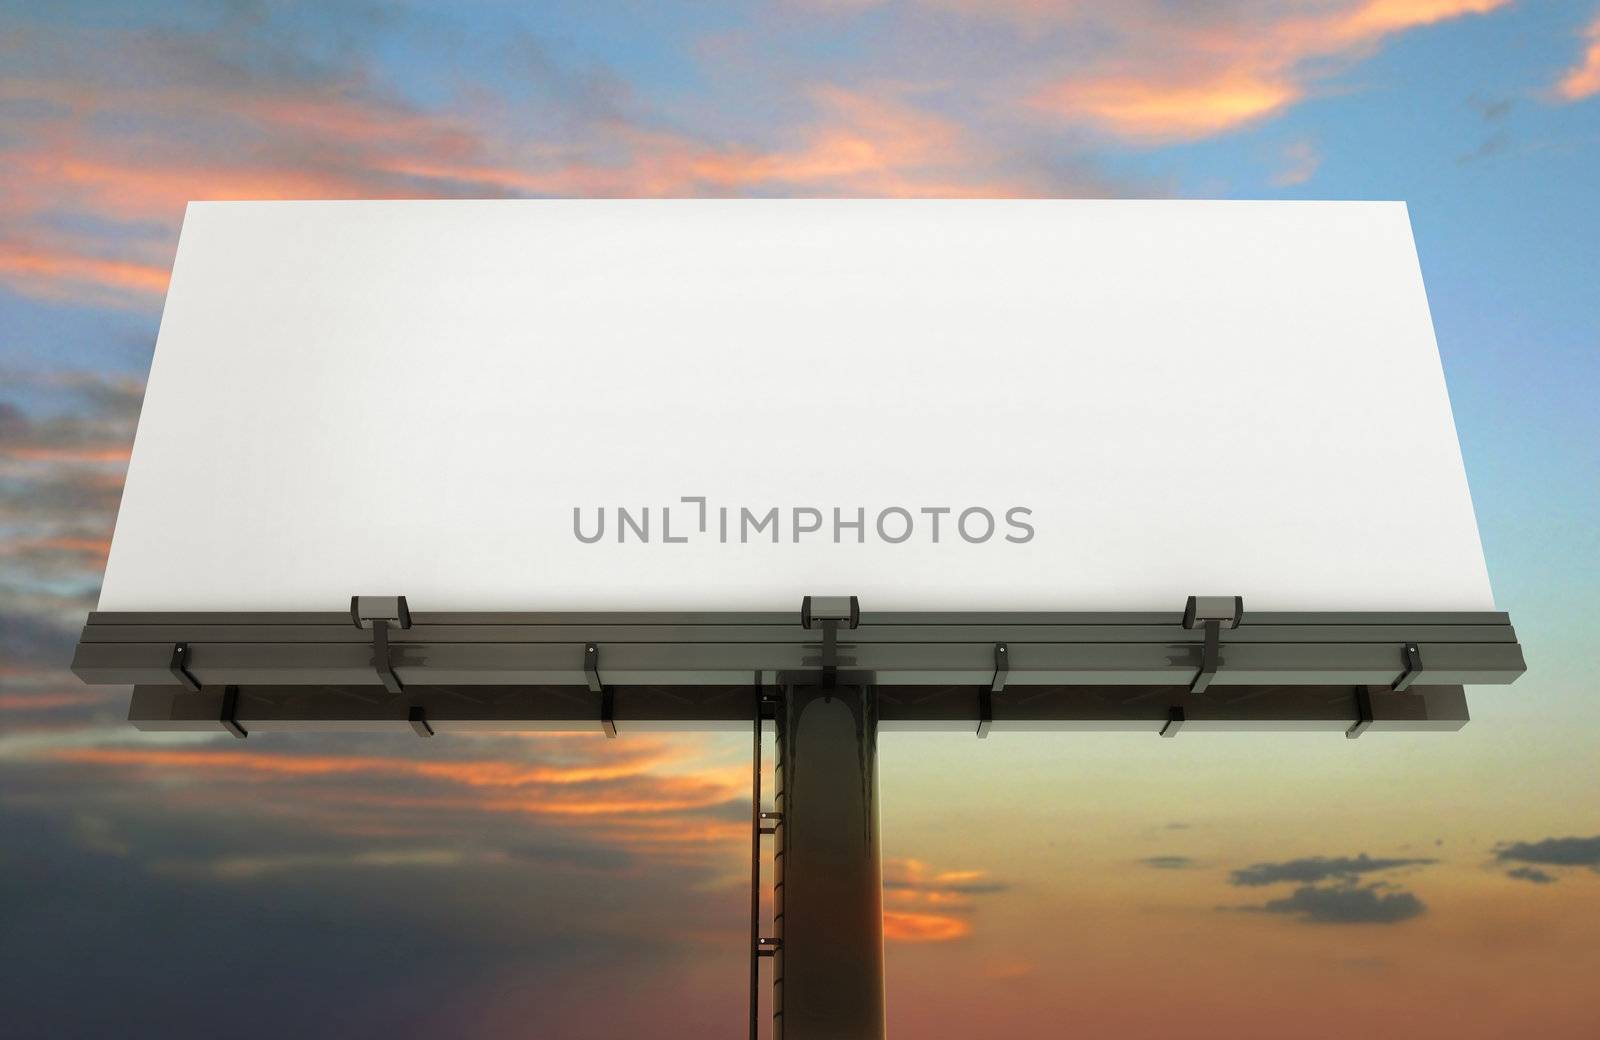 Billboard and sunset sky by paviem